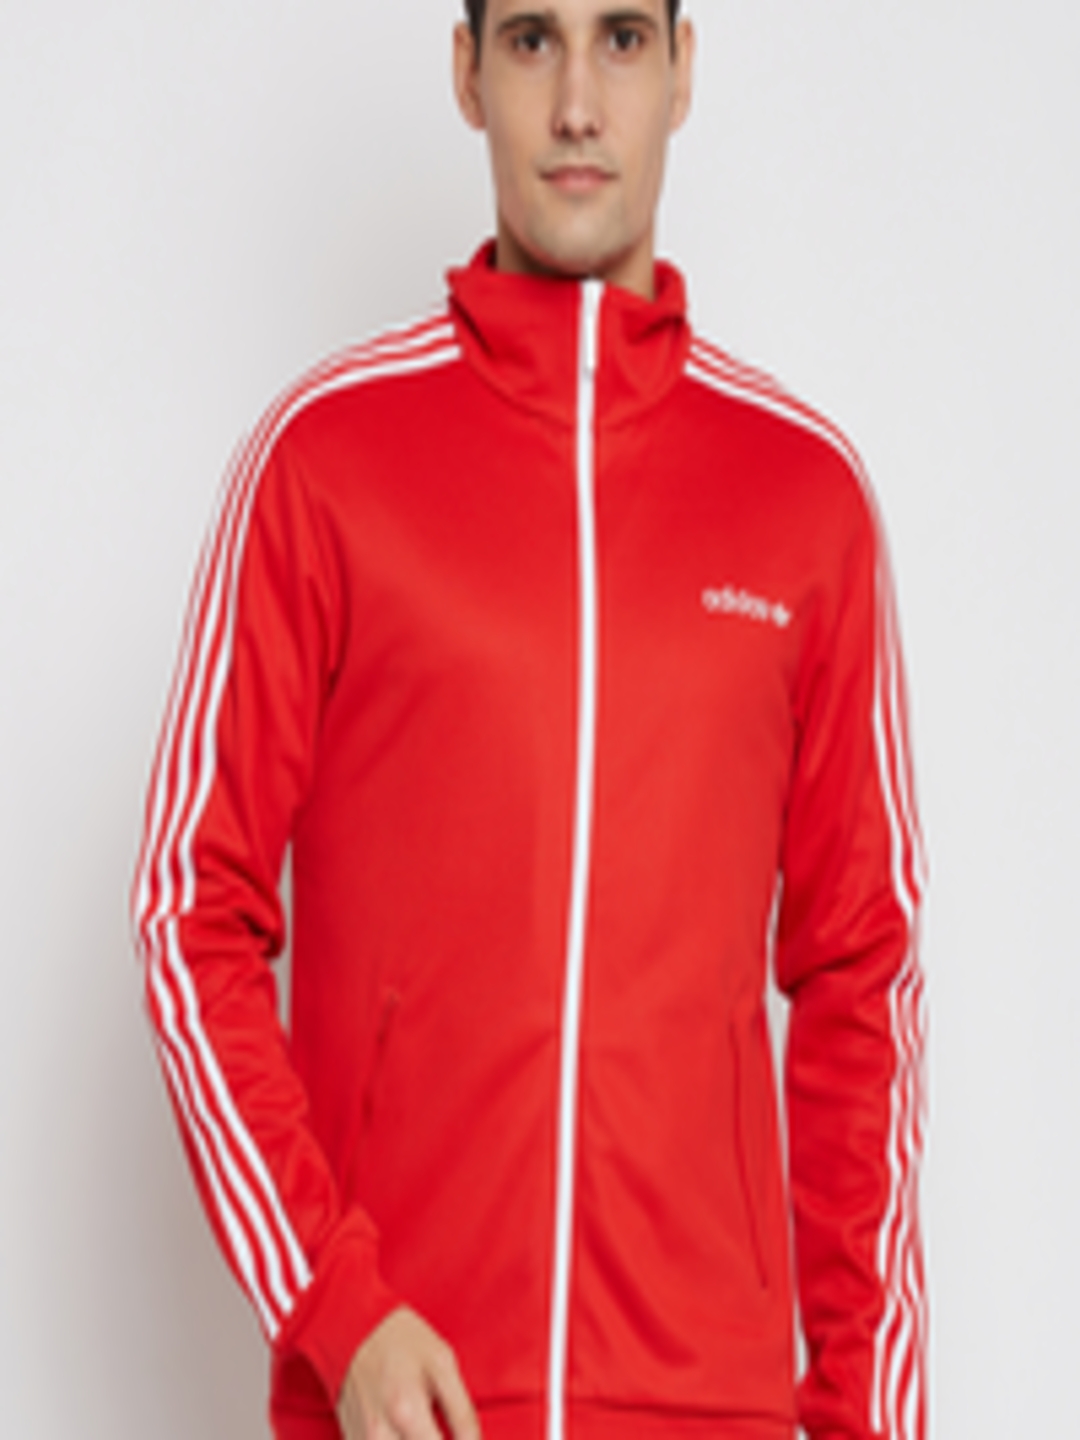 Buy ADIDAS Originals Men Red BB Solid Track Jacket - Jackets for Men